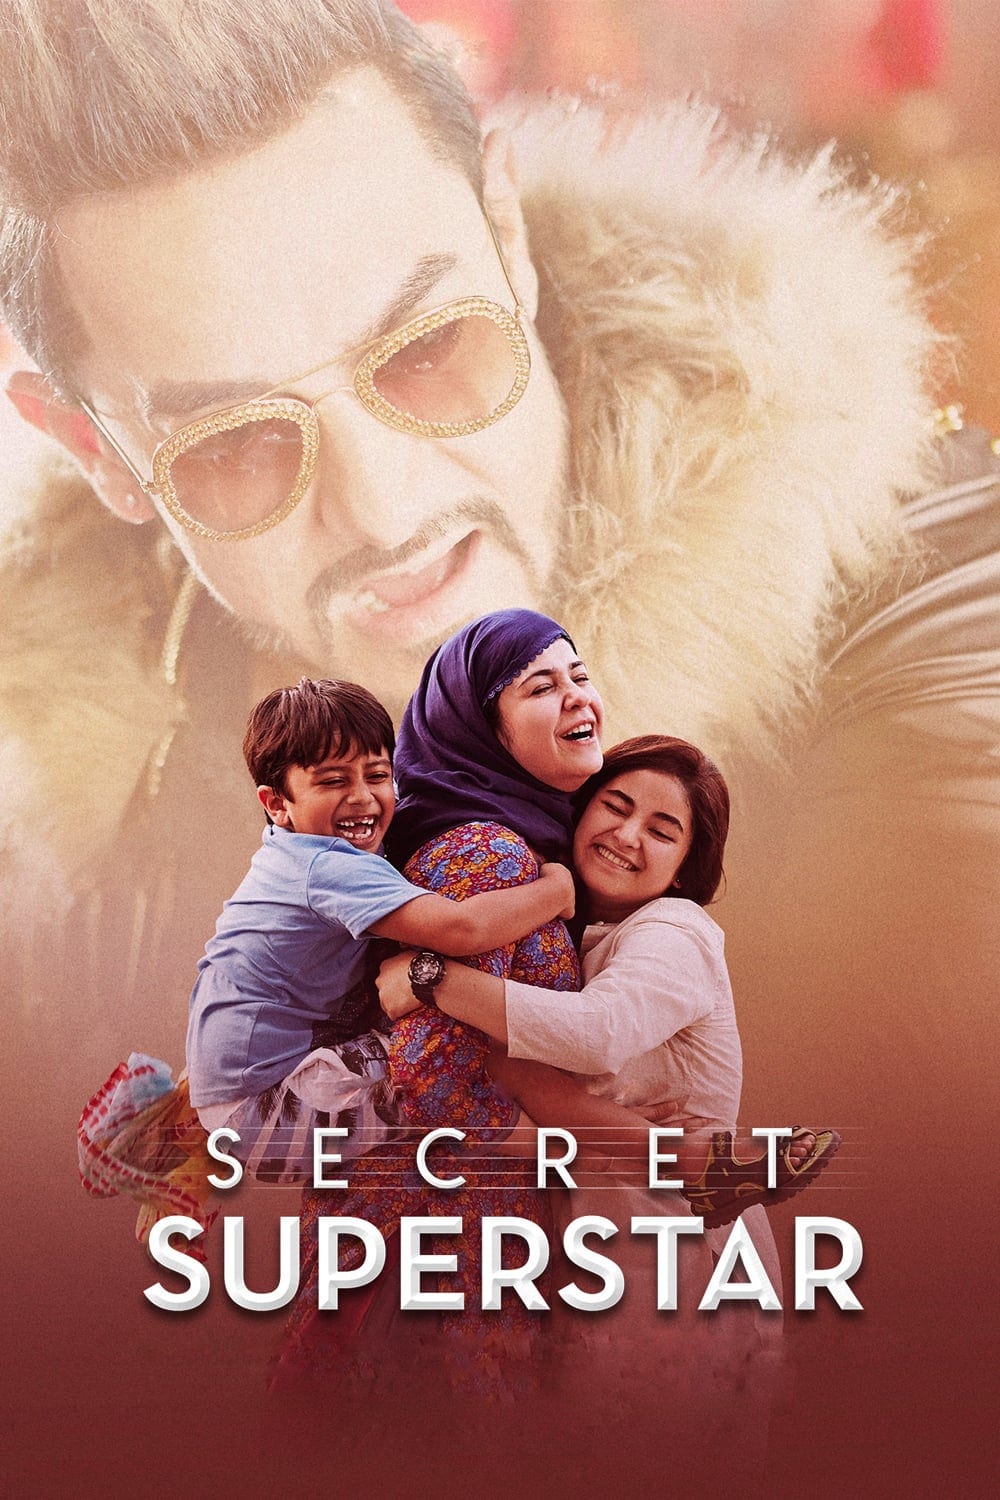 Poster for the movie "Secret Superstar"